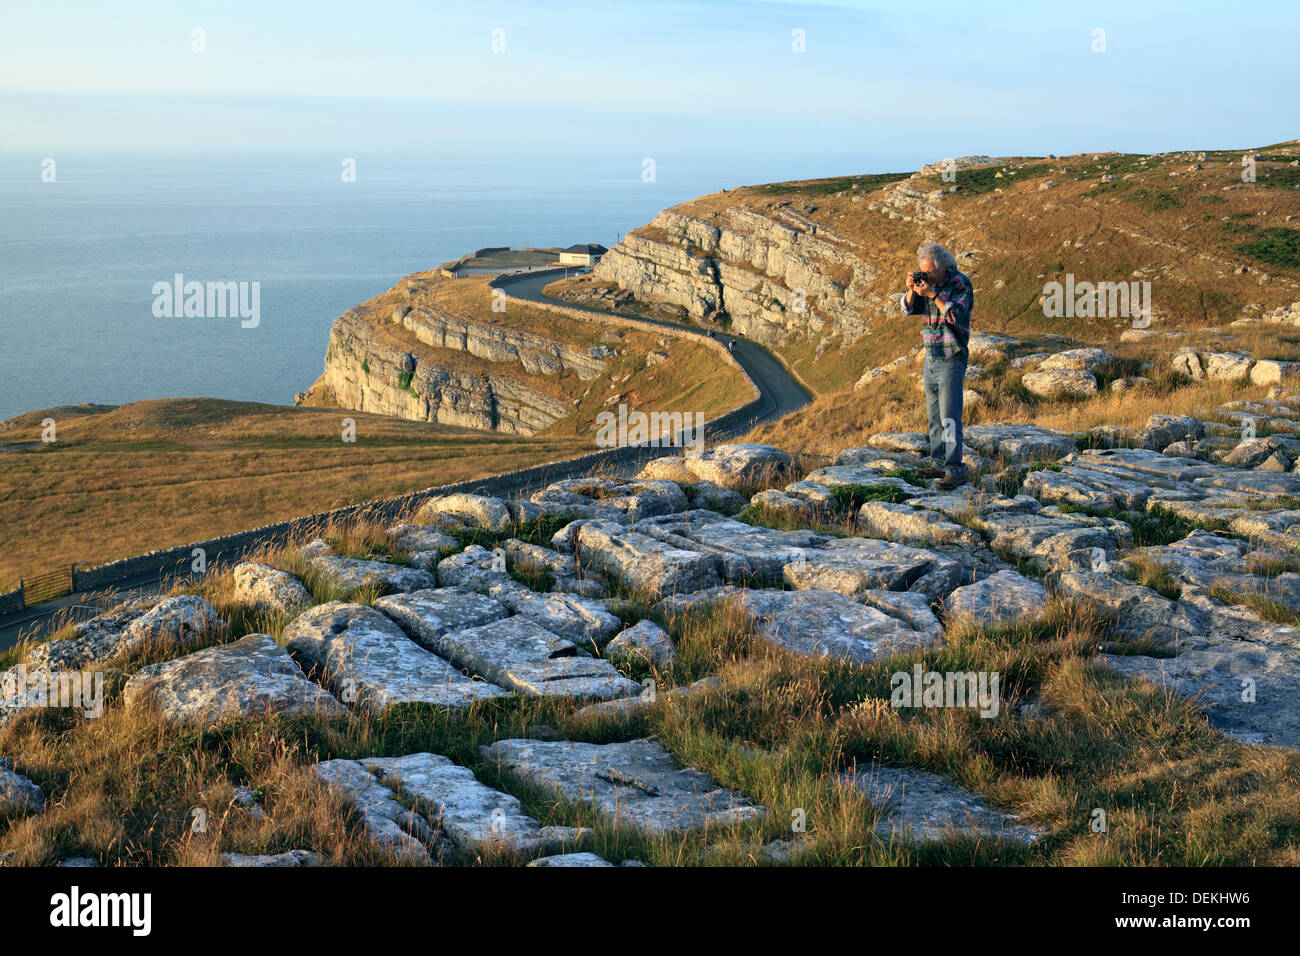 Limestone scenery: a limestone pavement on the Great Orme headland, Llandudno, North Wales. Limestone cliffs in the background. Stock Photo